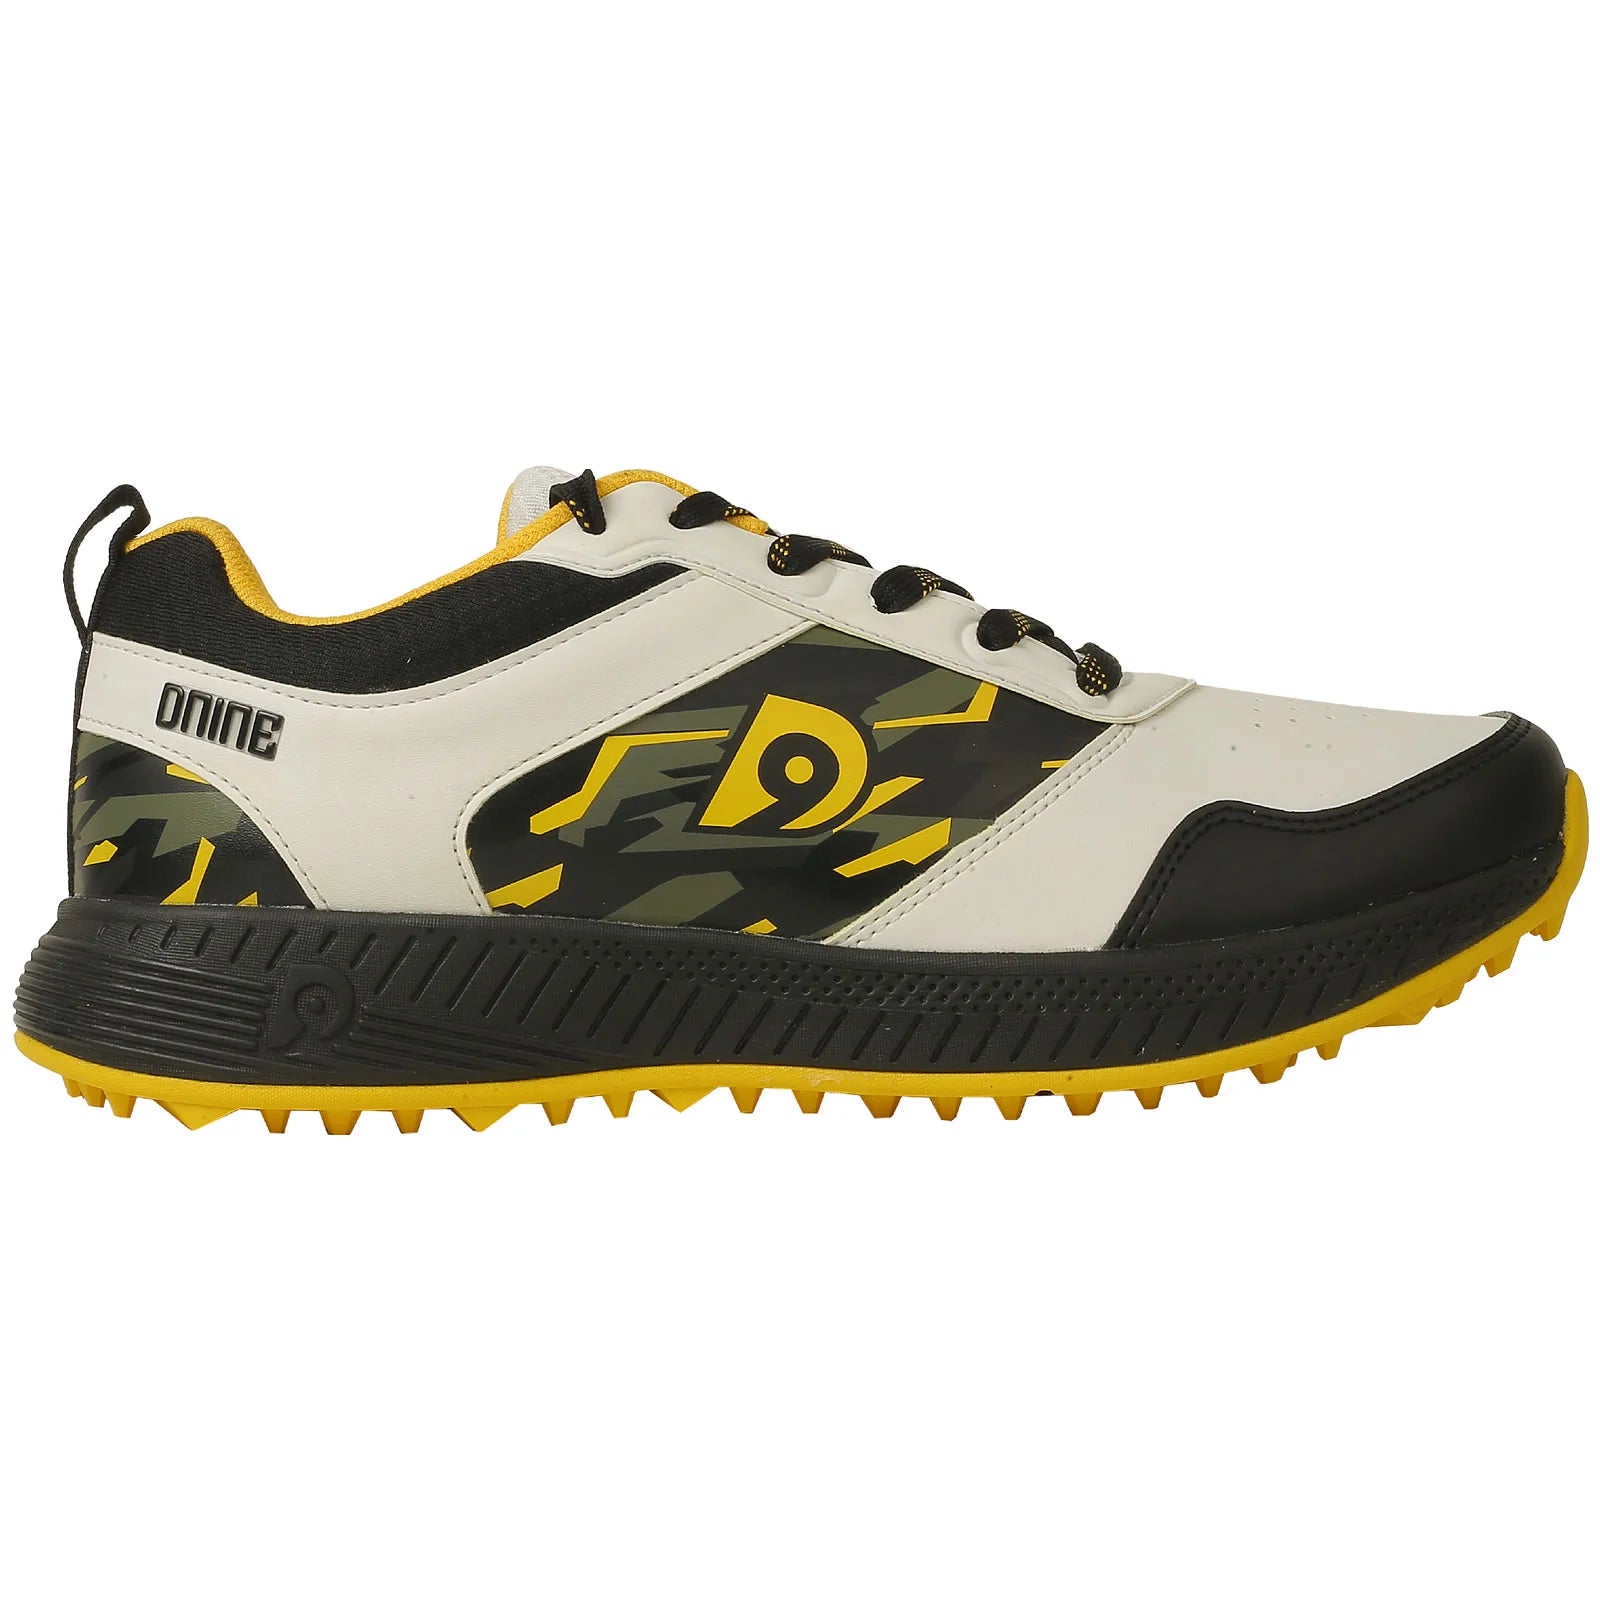 DNINE Polyurethane (PU) Prince-1 Yellow/Black Cricket Rubber Spike Shoes